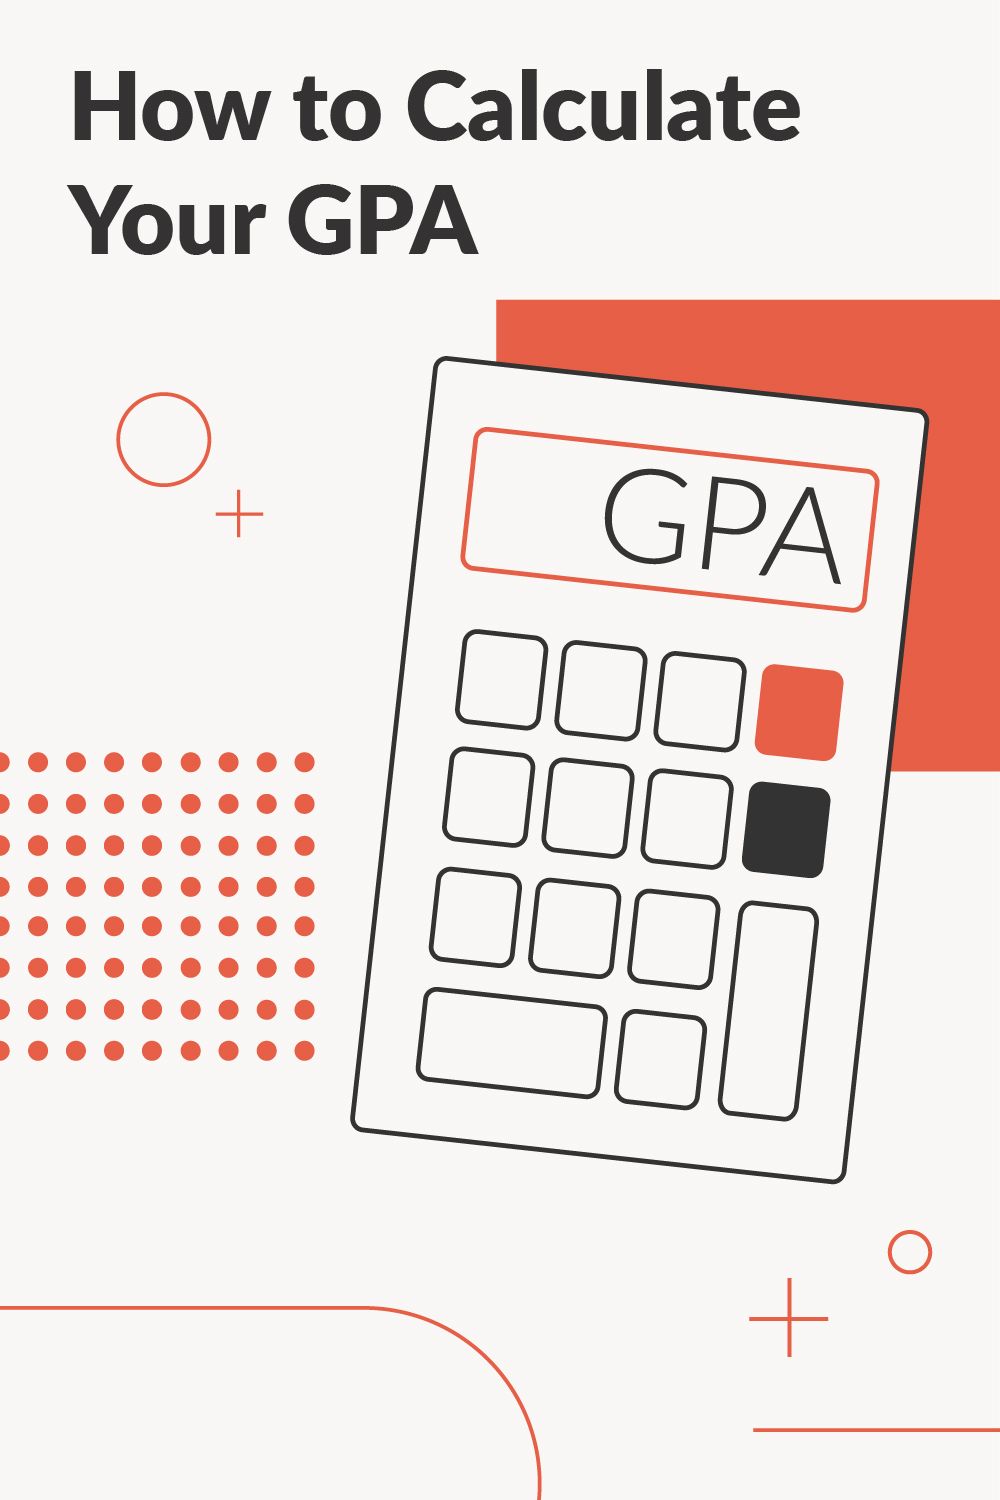 How to Calculate GPA